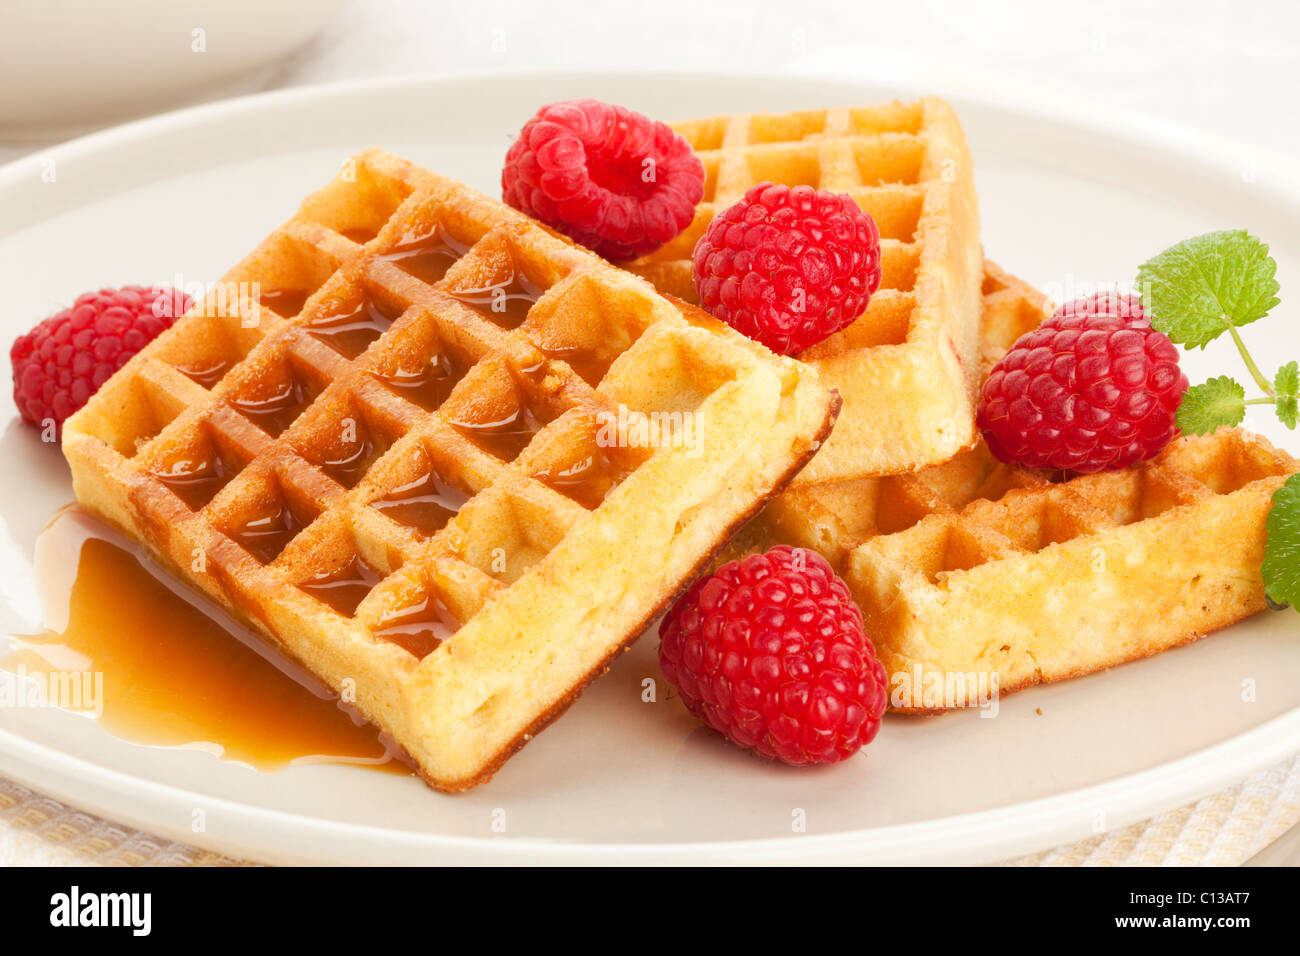 belgian waffles with raspberries and caramel sauce Stock Photo